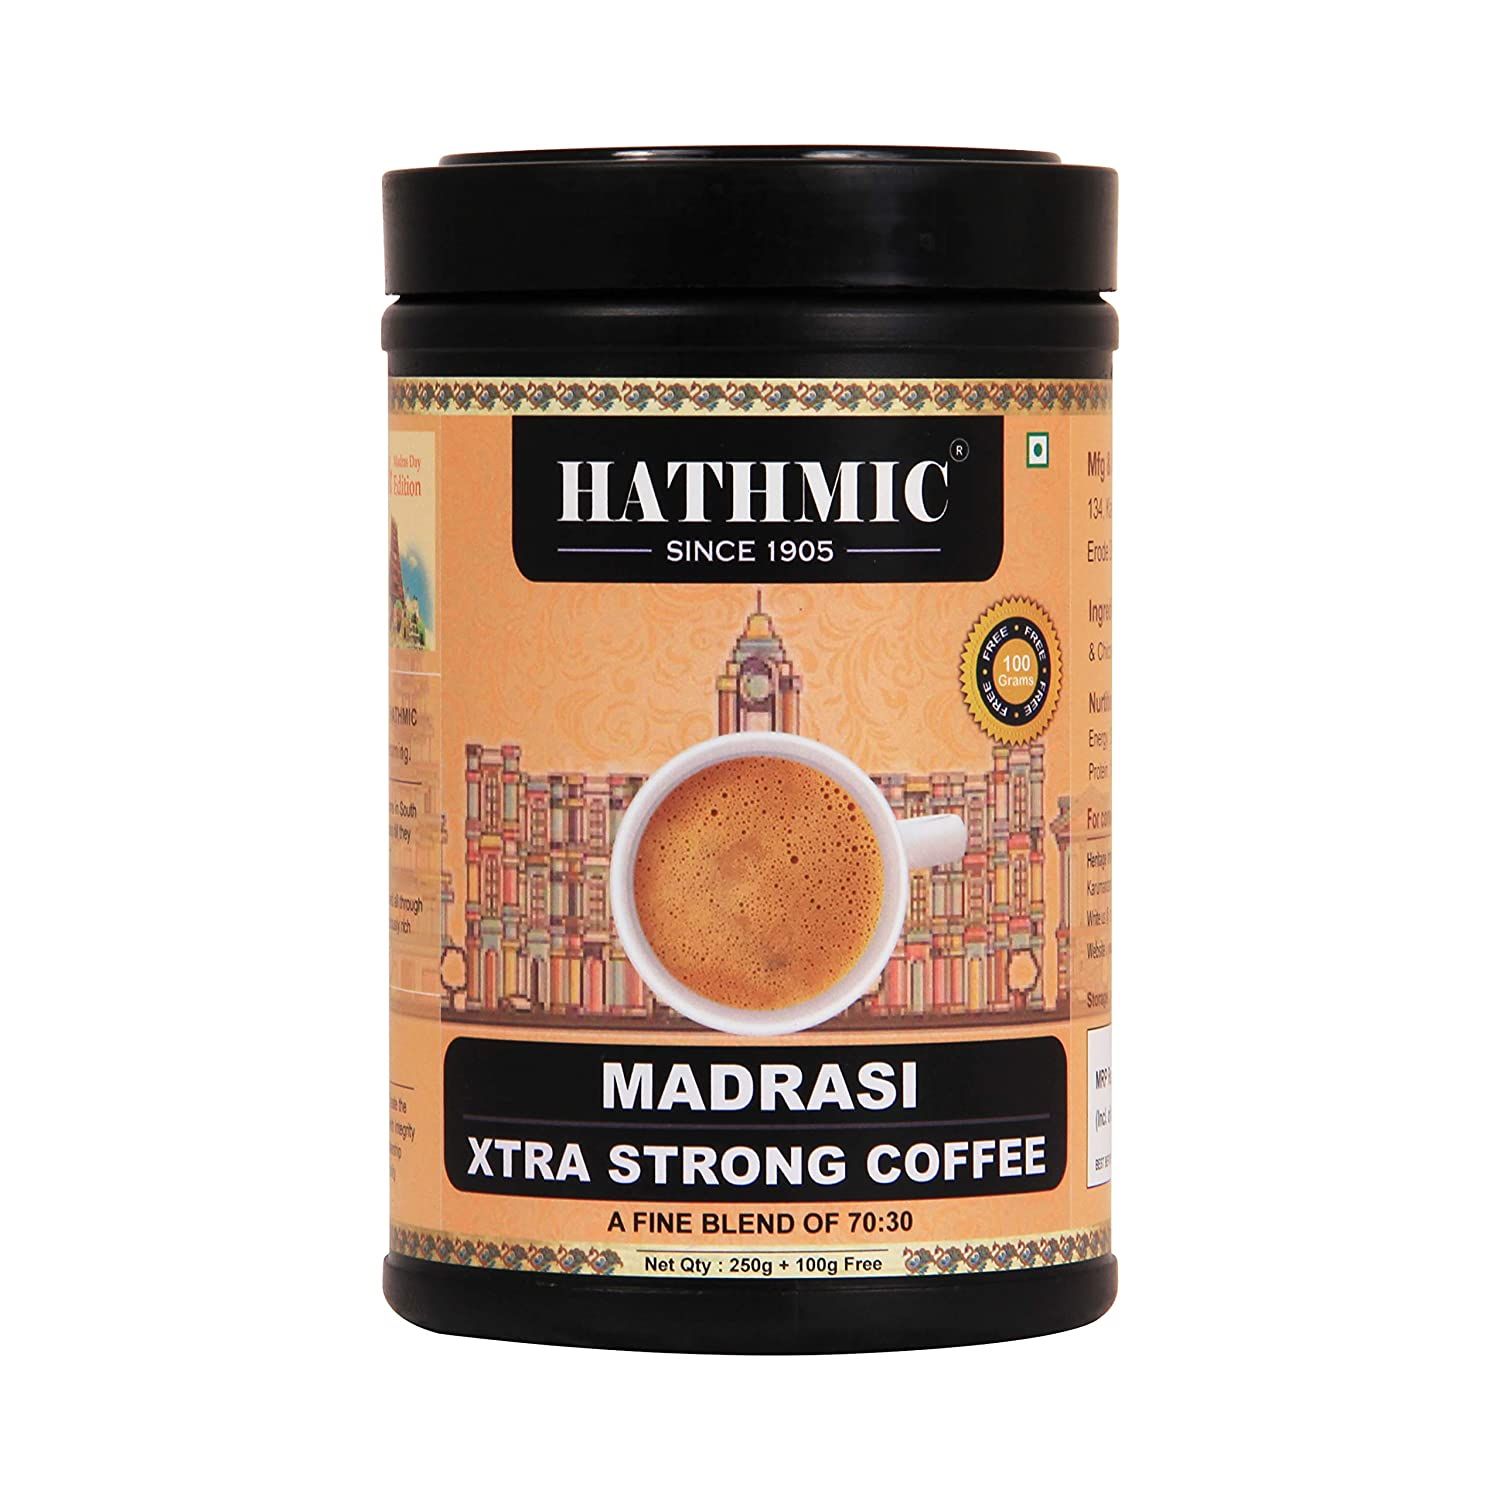 Hathmic Madrasi Xtra Strong Coffee Image